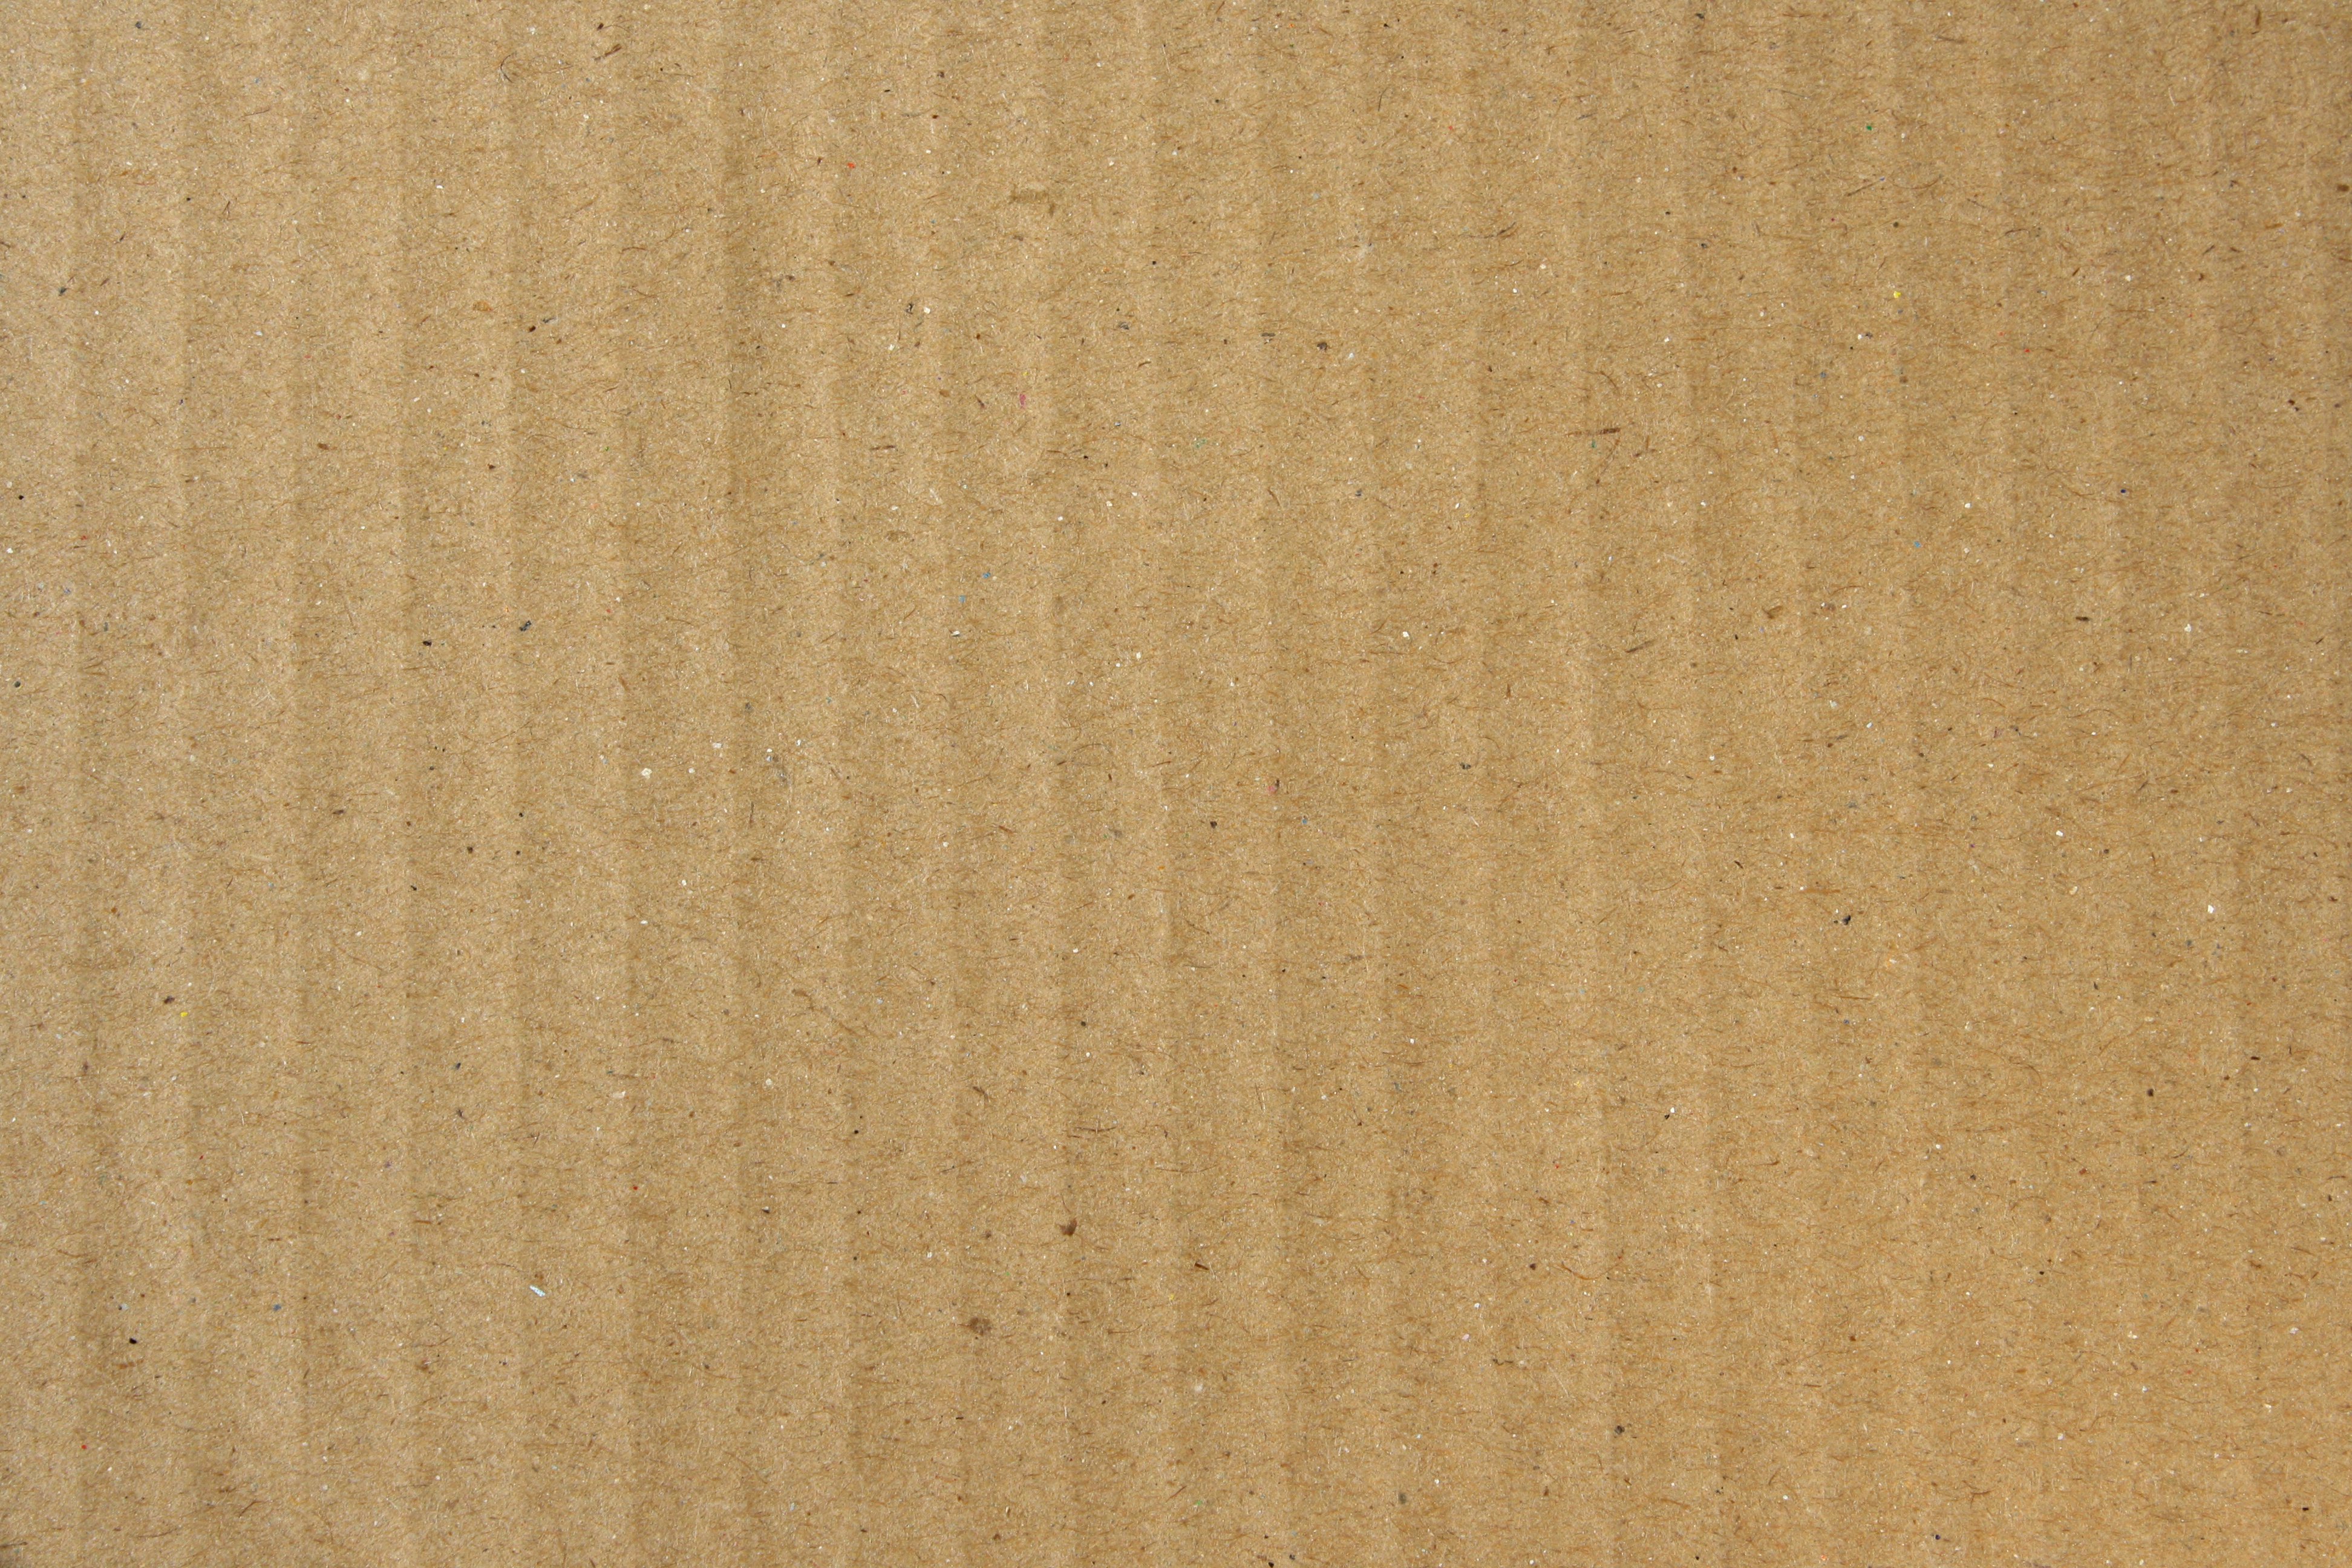 Cardboard Texture High Resolution Photo Dimensions